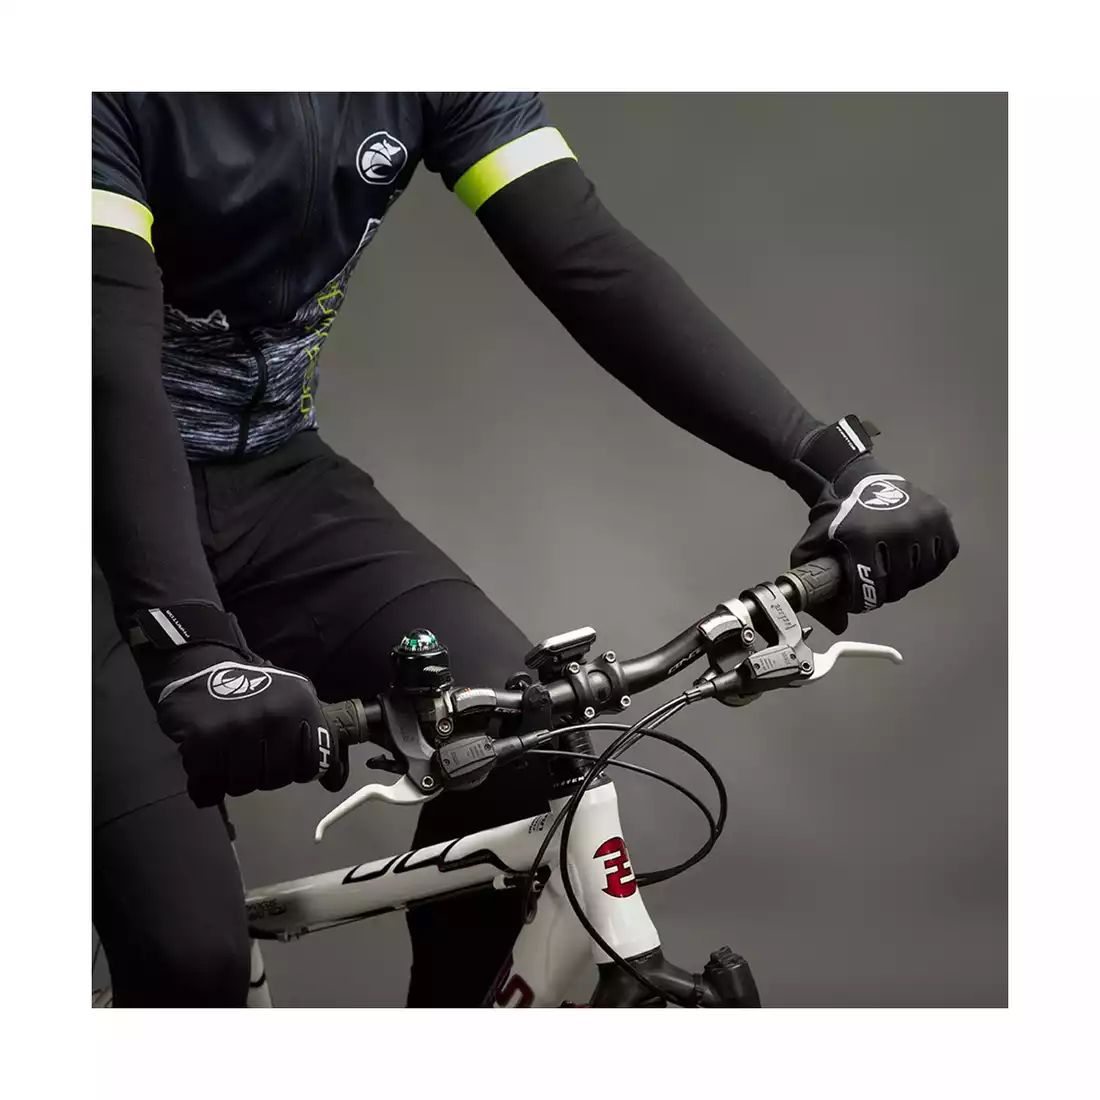 CHIBA PHANTOM lightweight winter cycling gloves black 3150520